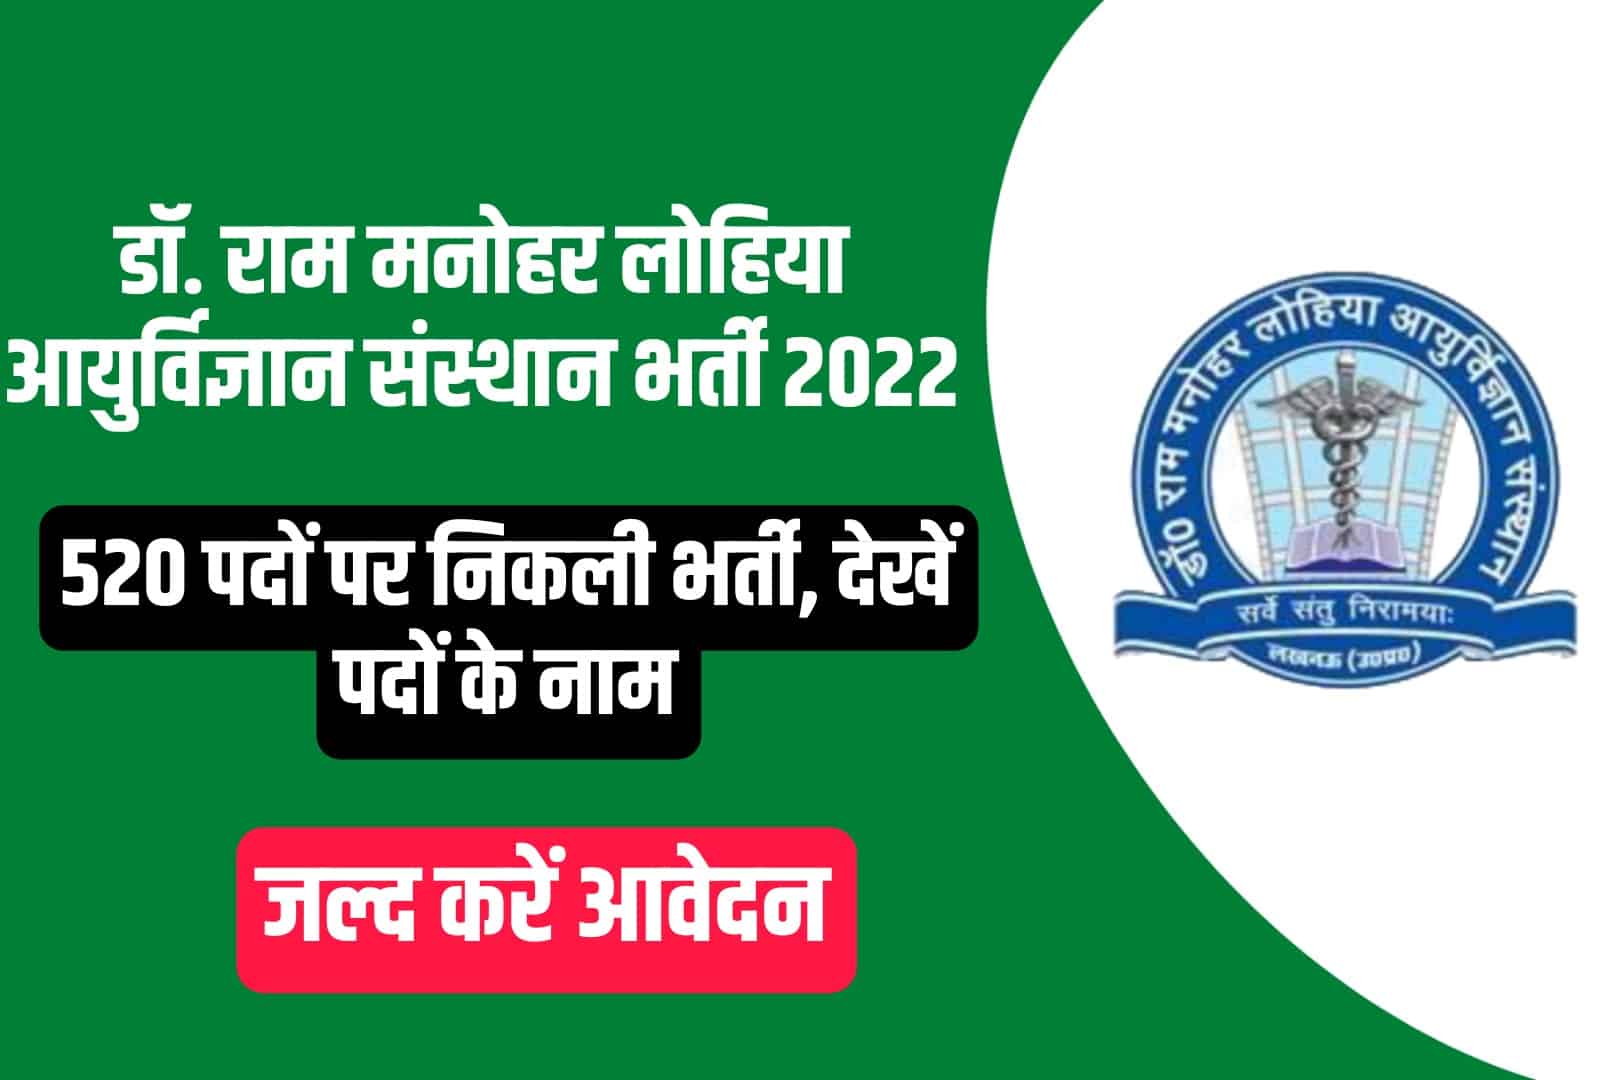 Dr RML IMS Lucknow Recruitment 2022 Online Form | डॉ. राम मनोहर लोहिया आयुर्विज्ञान संस्थान भर्ती 2022